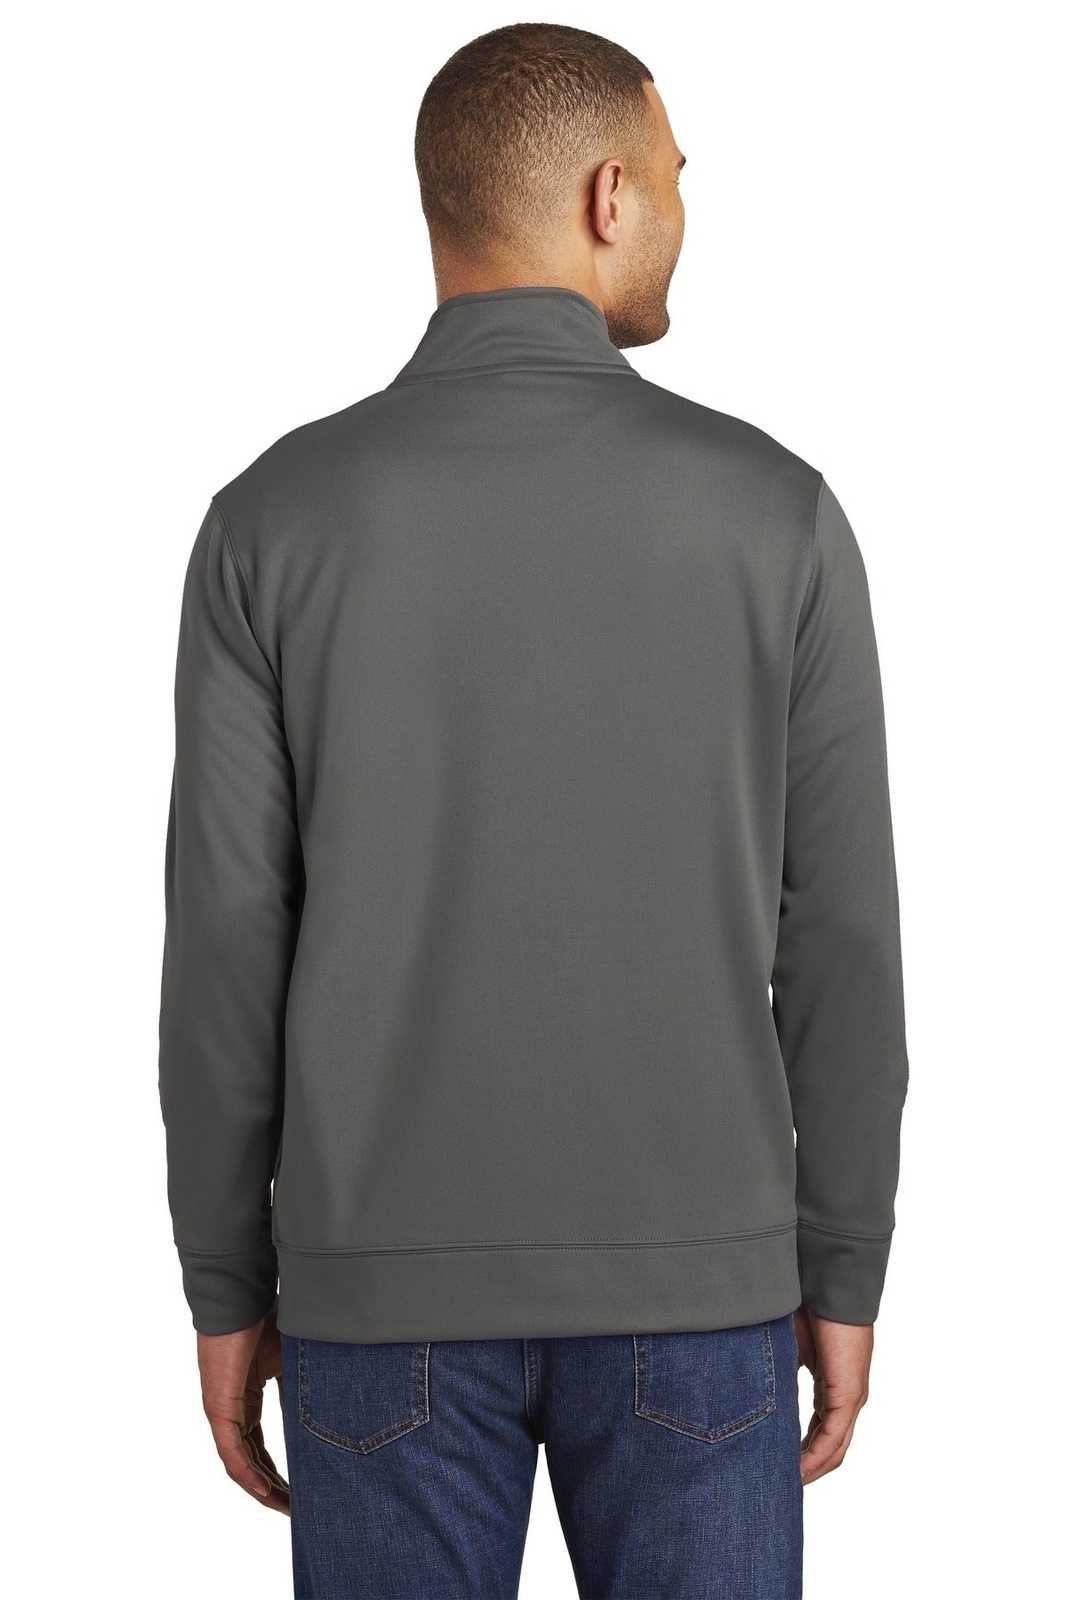 Port &amp; Company PC590Q Fleece 1/4-Zip Pullover Sweatshirt - Charcoal - HIT a Double - 2